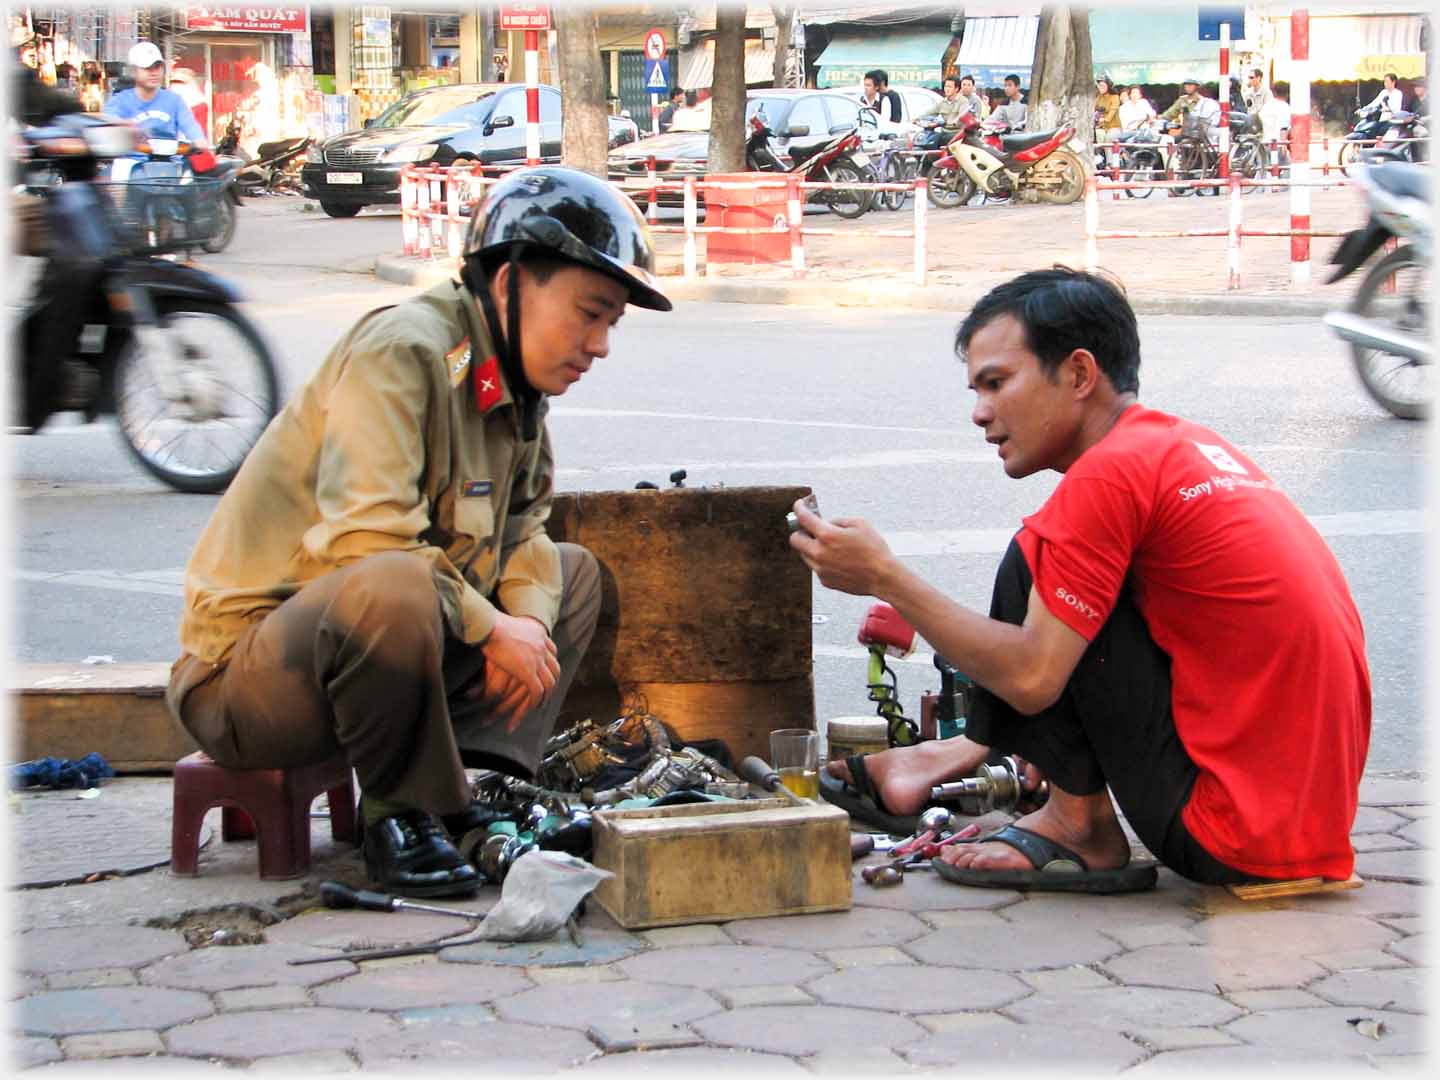 Two men sitting at roadside examining an item.